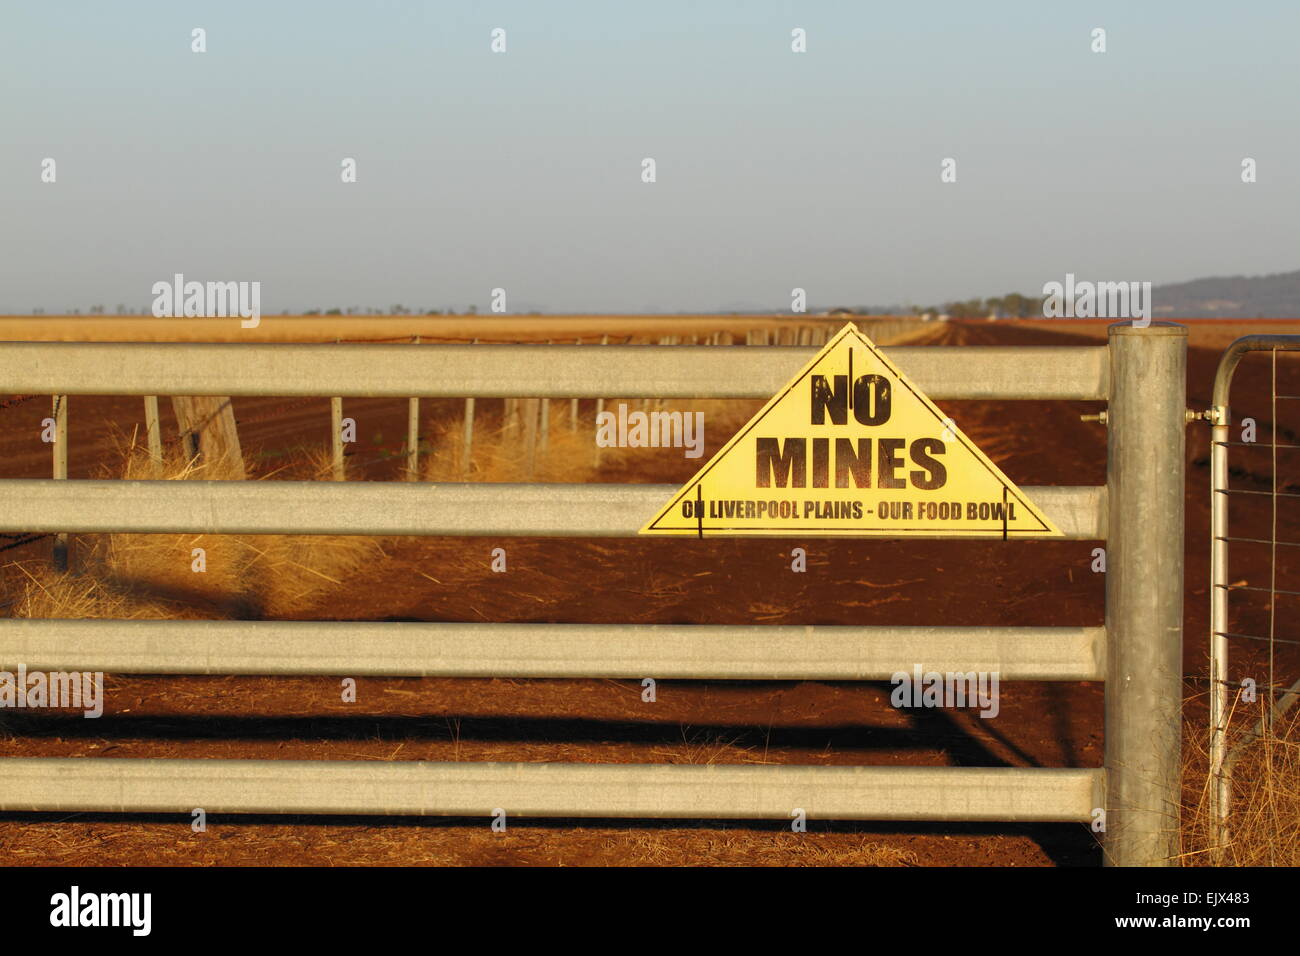 Ein Anti-Minen-Schild am Breeza Station, Breeza, NSW, Australien. "Keine Minen auf Liverpool Plains - unsere Futternapf." Stockfoto